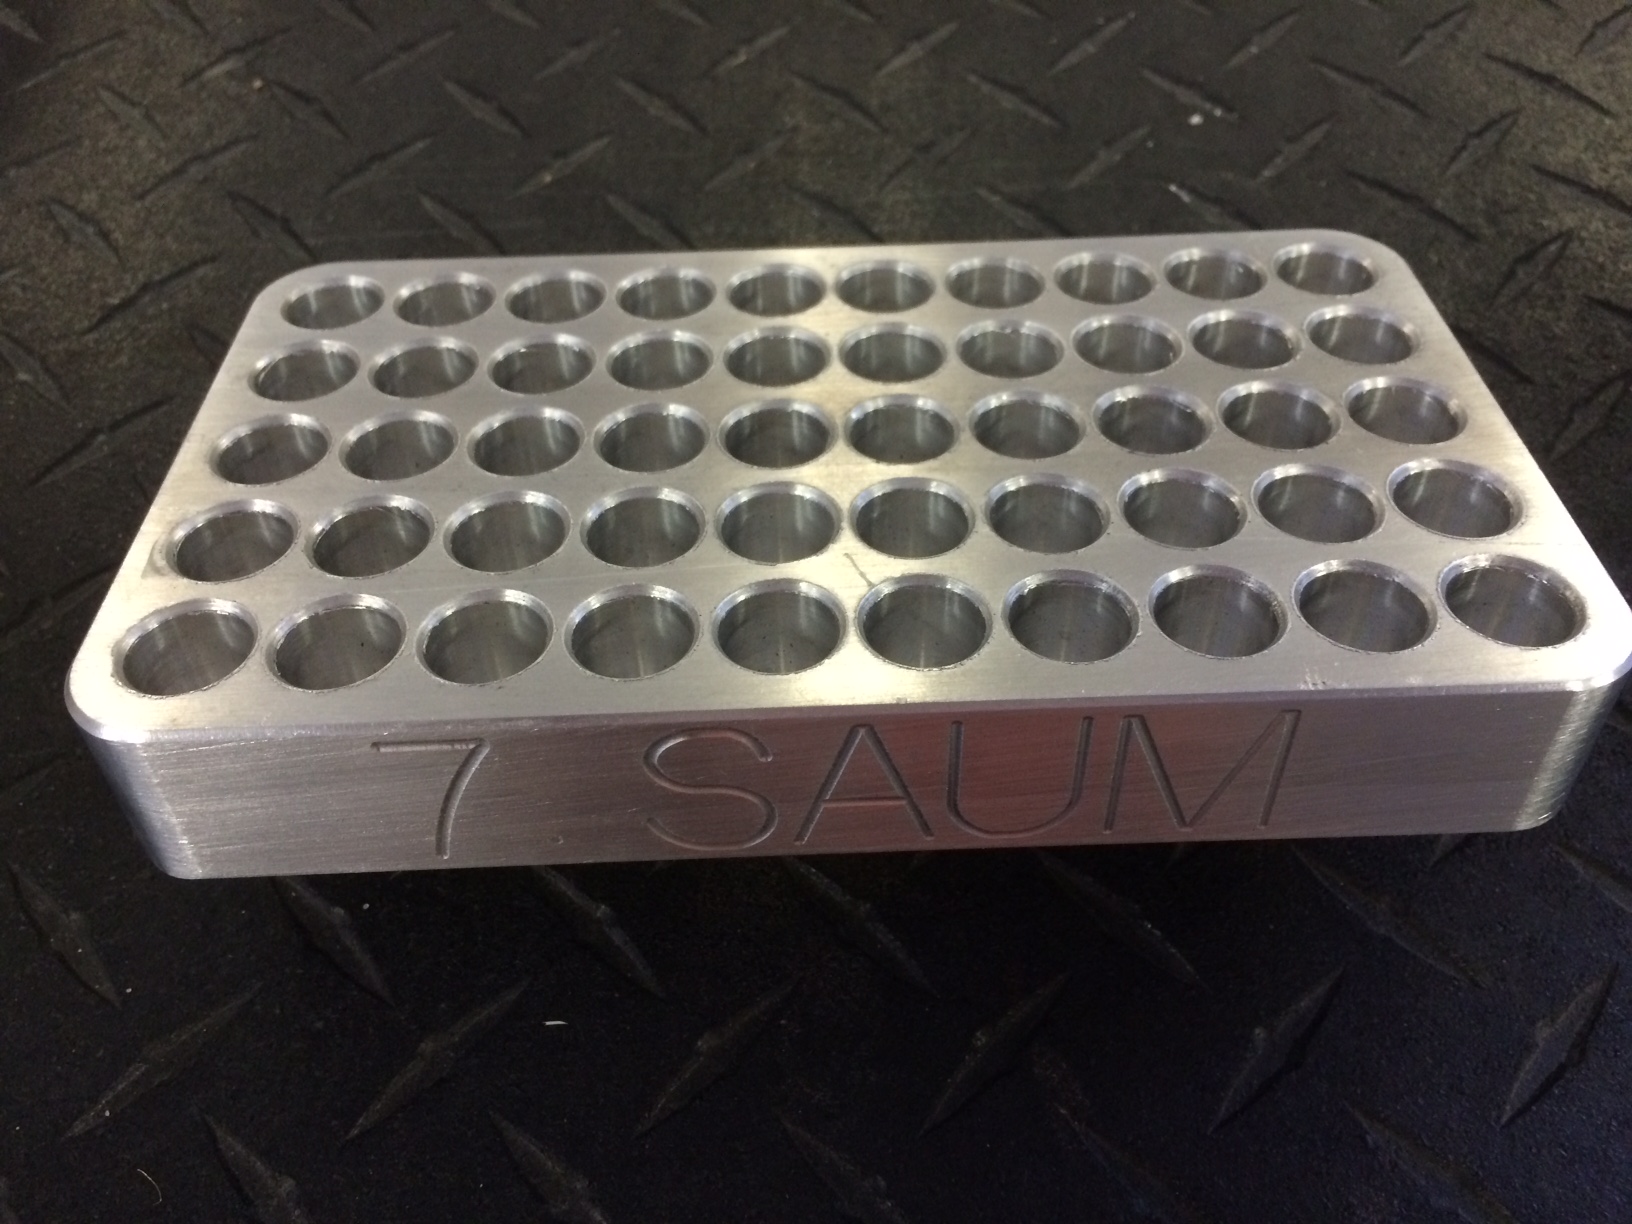 7 SAUM Aluminum Loading Block